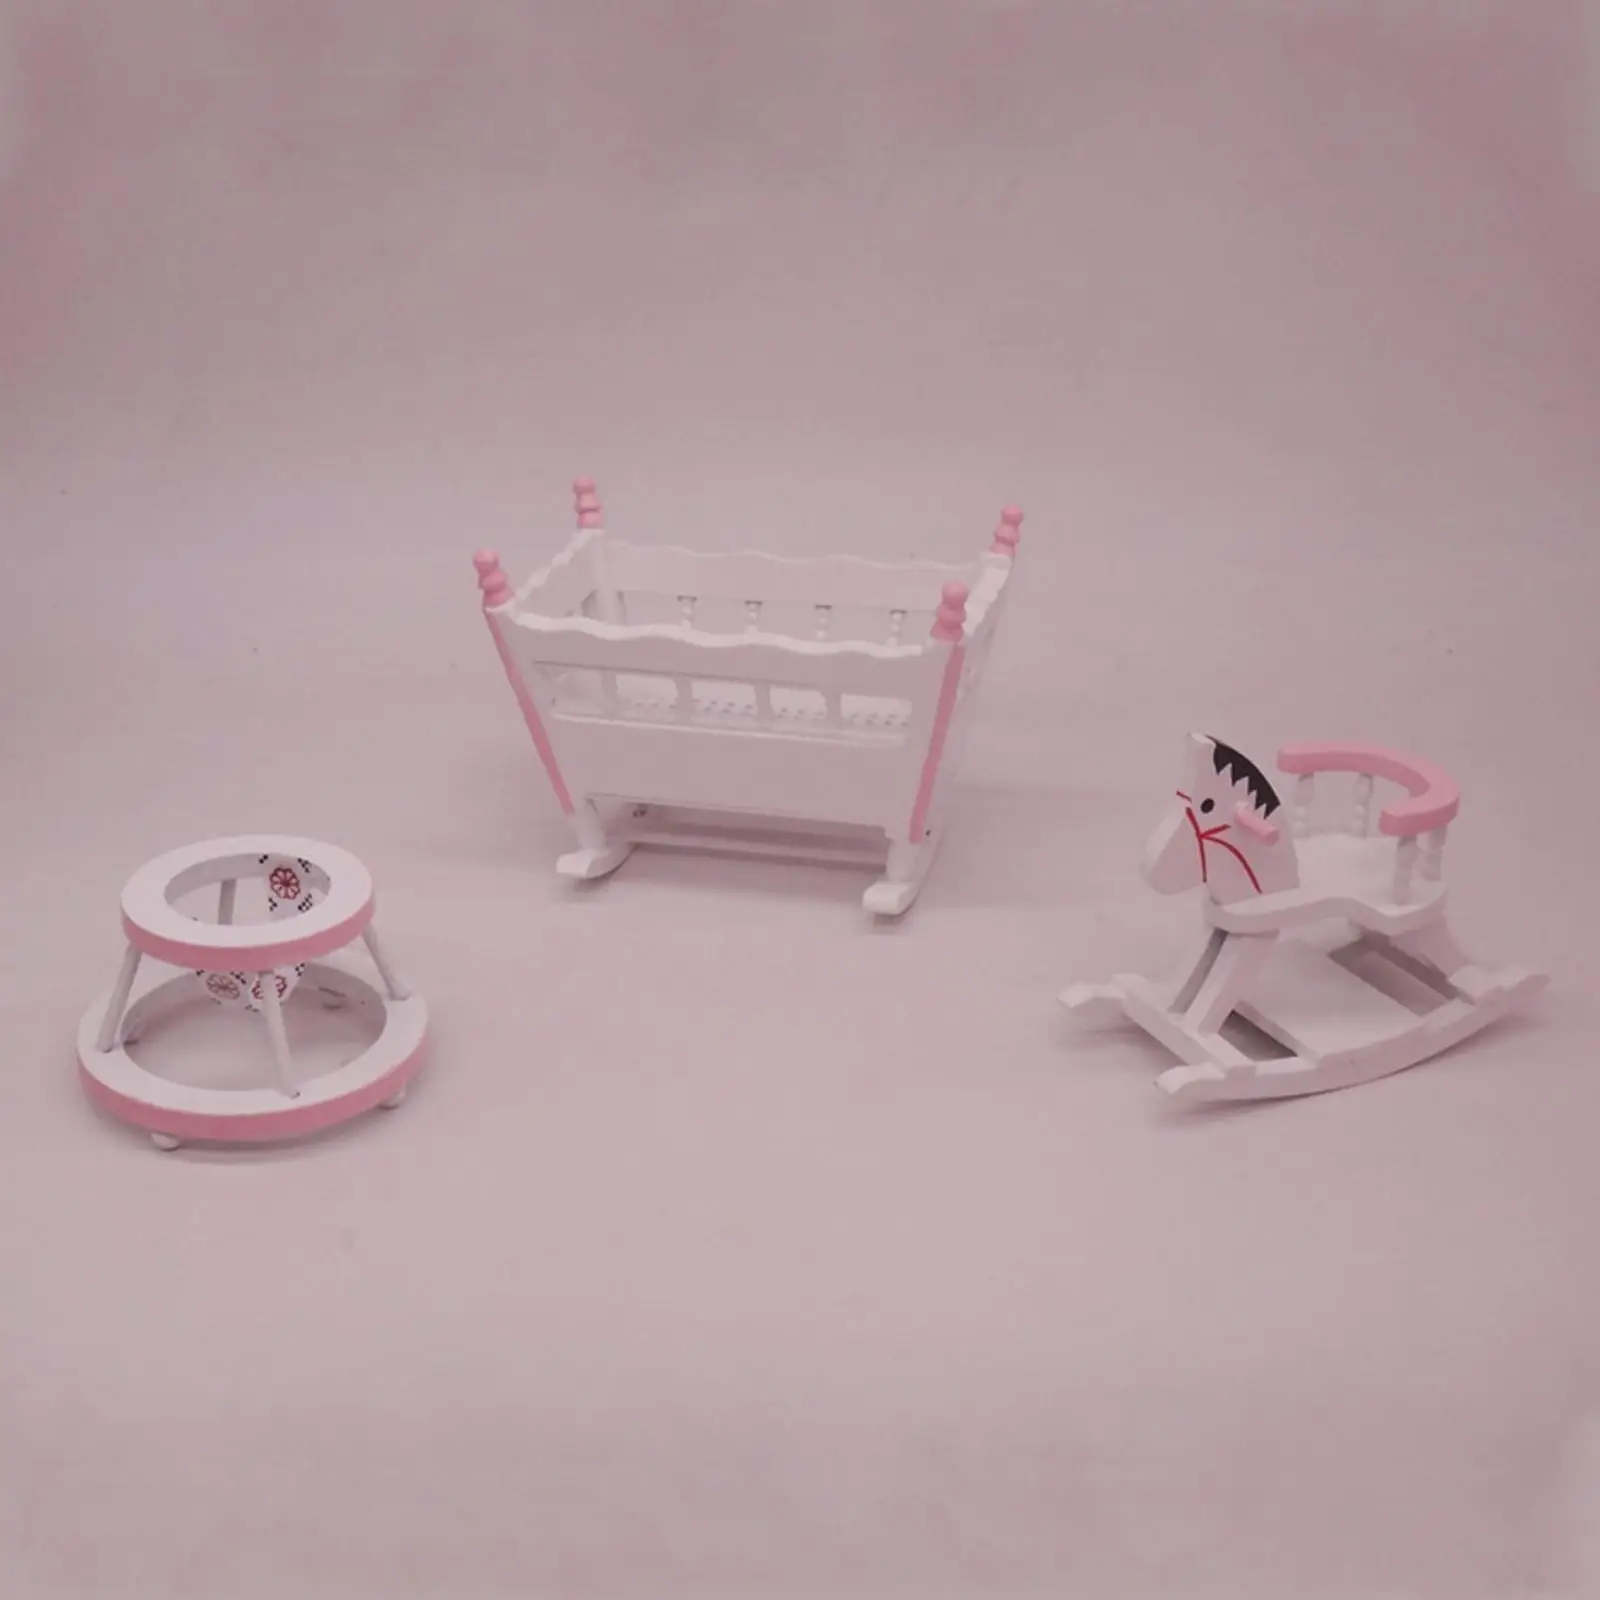 Doll House 1:12 Scale Landscape Decoration Mini Furniture Model for Bedroom Adult